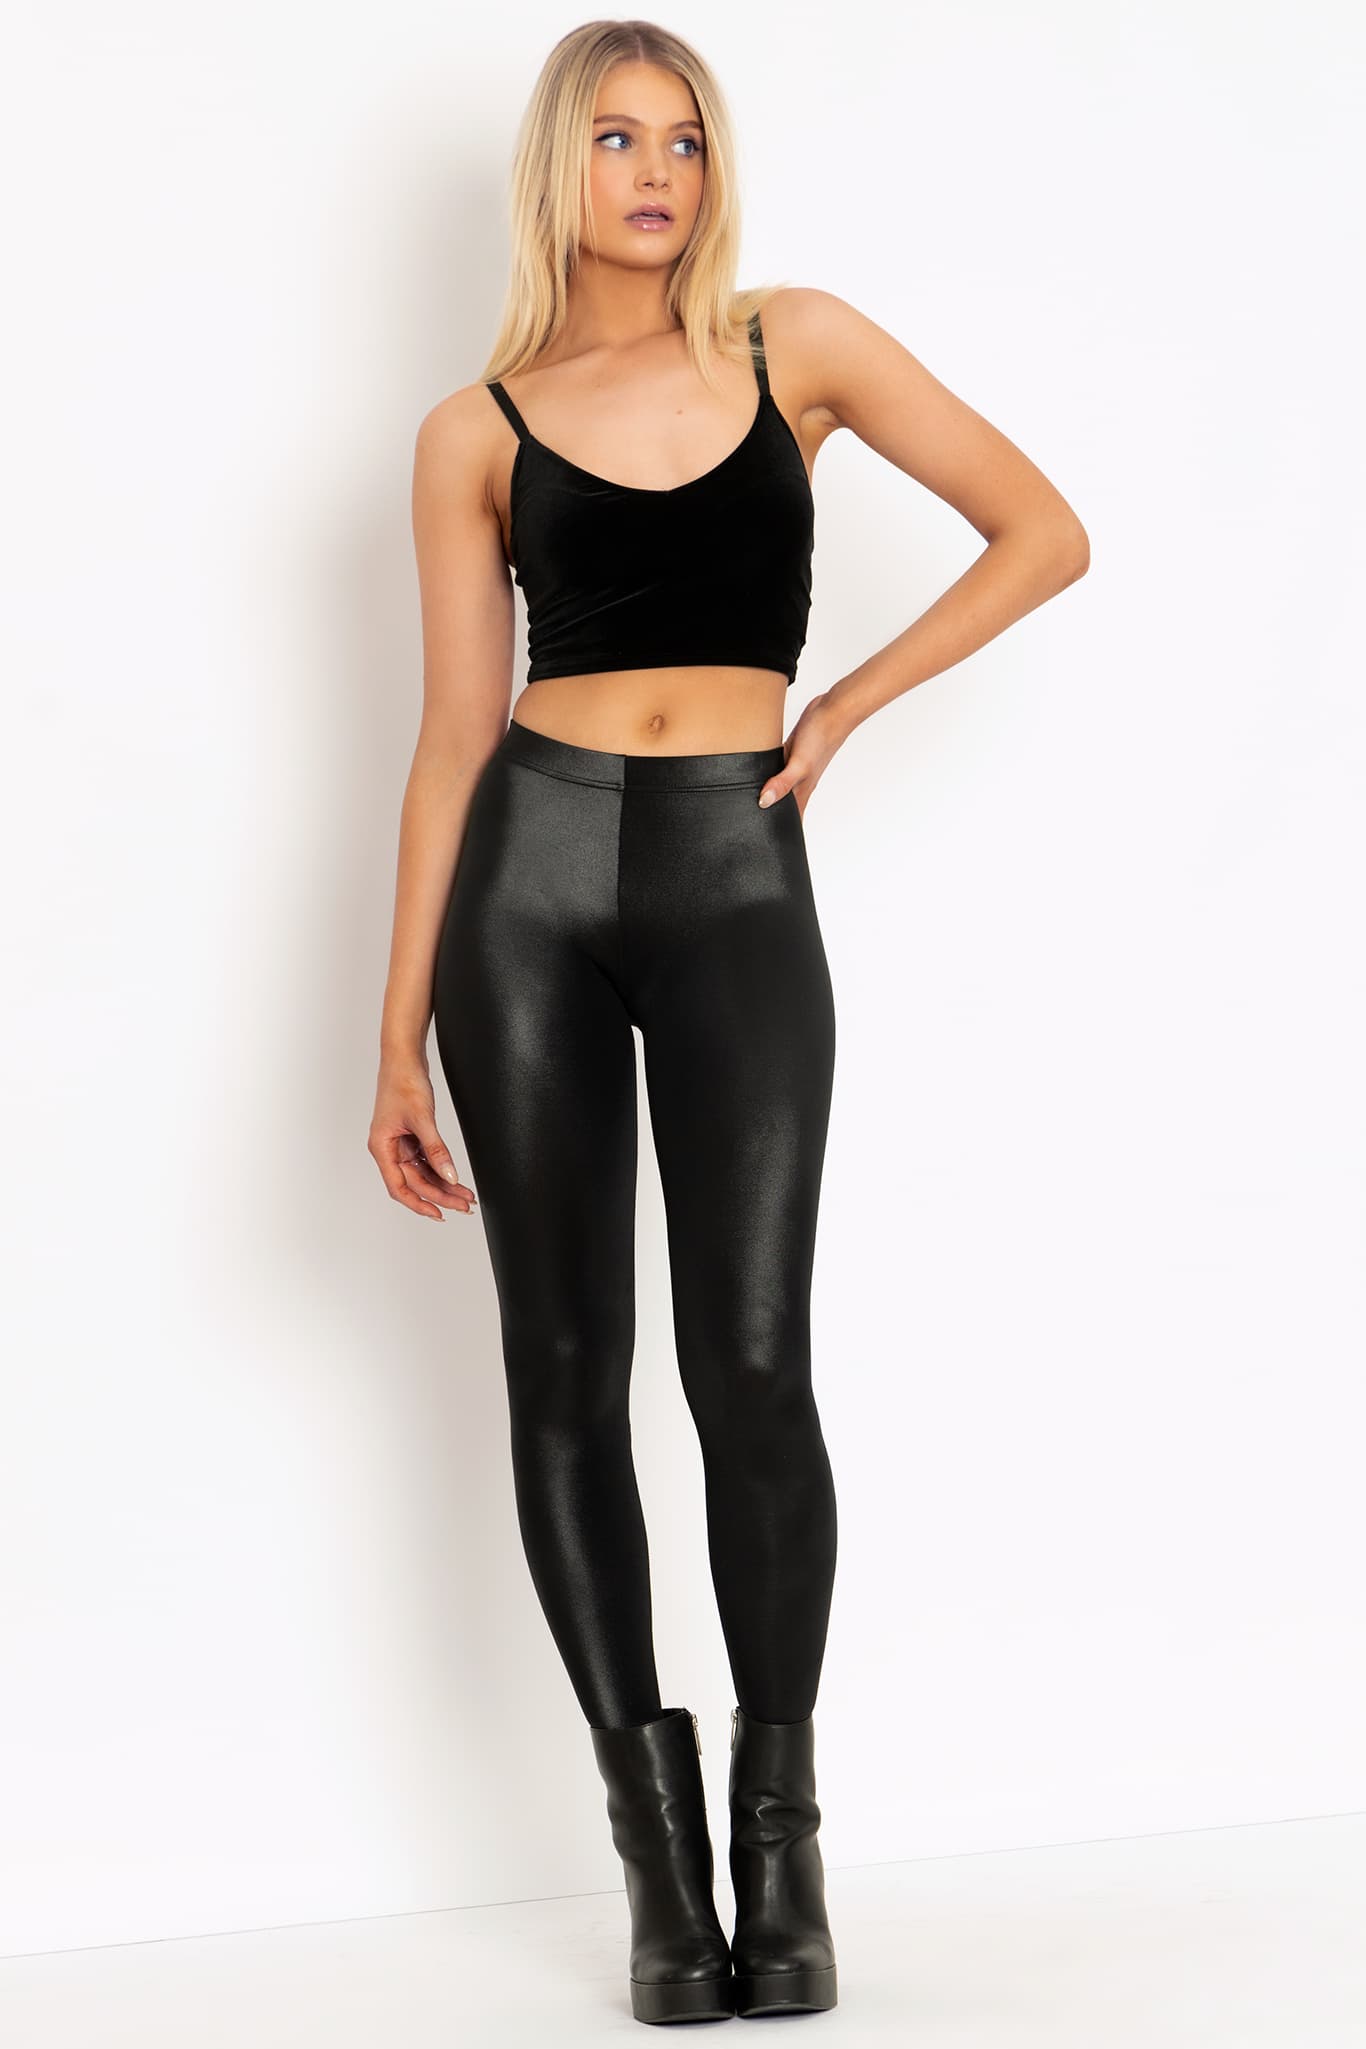 Ladies Black wet look leggings HIGH WAIST faux Leather Stretch Pant  Trousers PVC | eBay